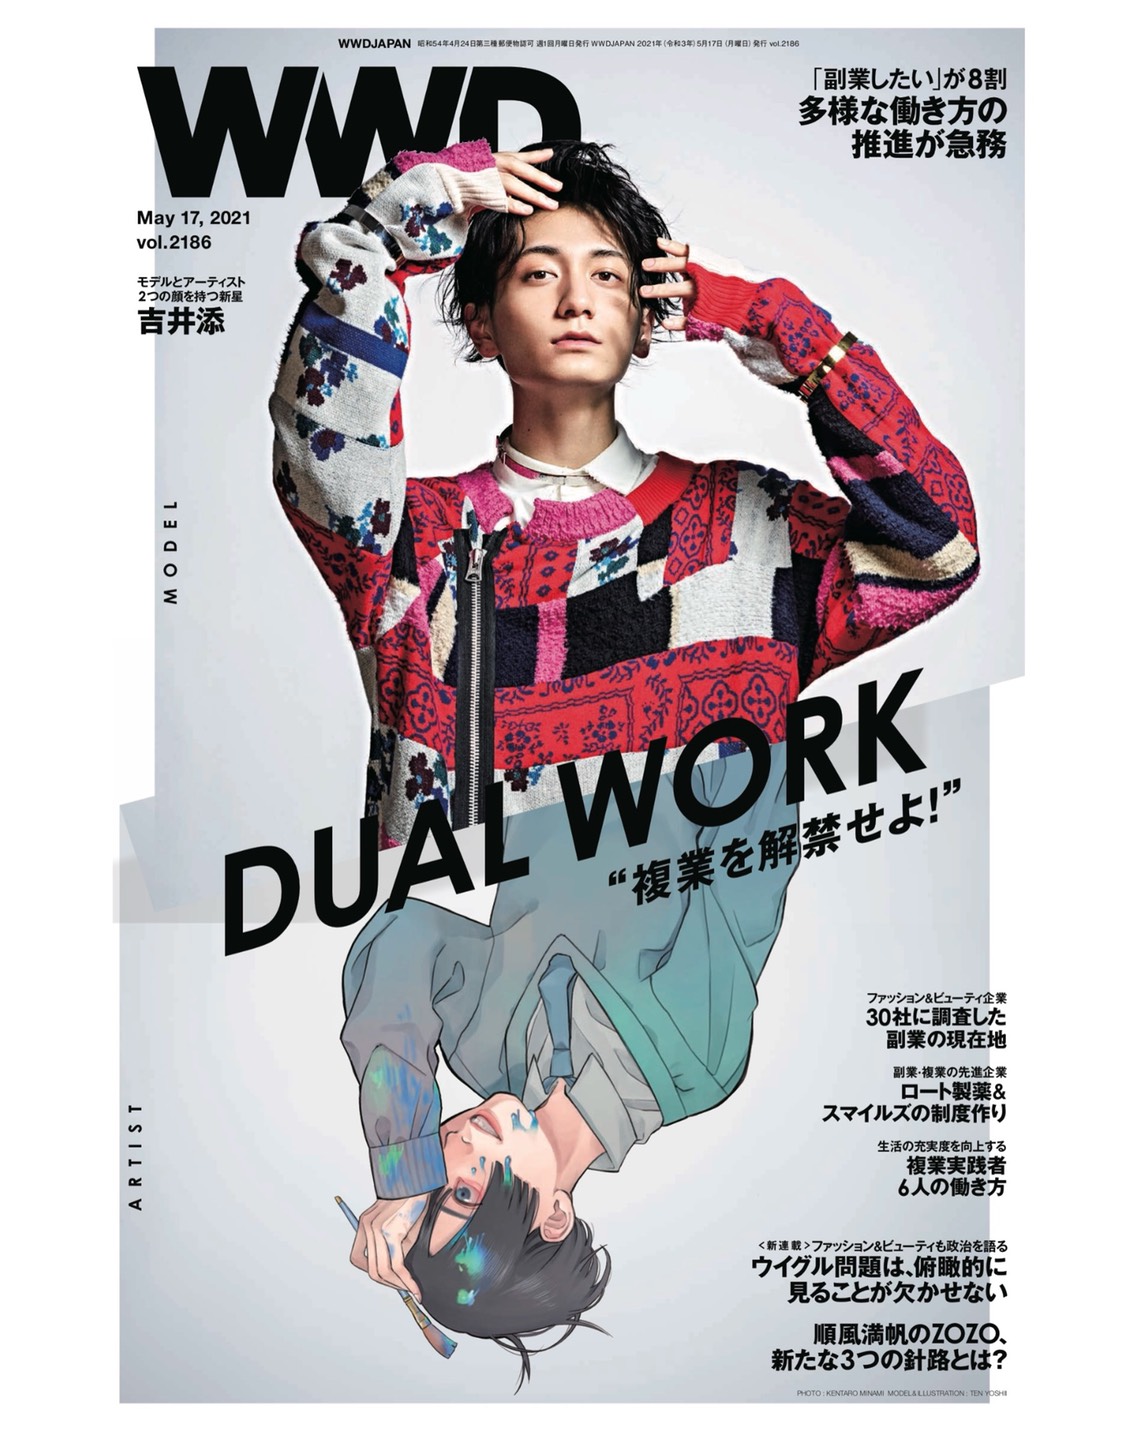 WWD JAPAN 表紙 | NEWS | Image Models 株式会社ボン イマージュ